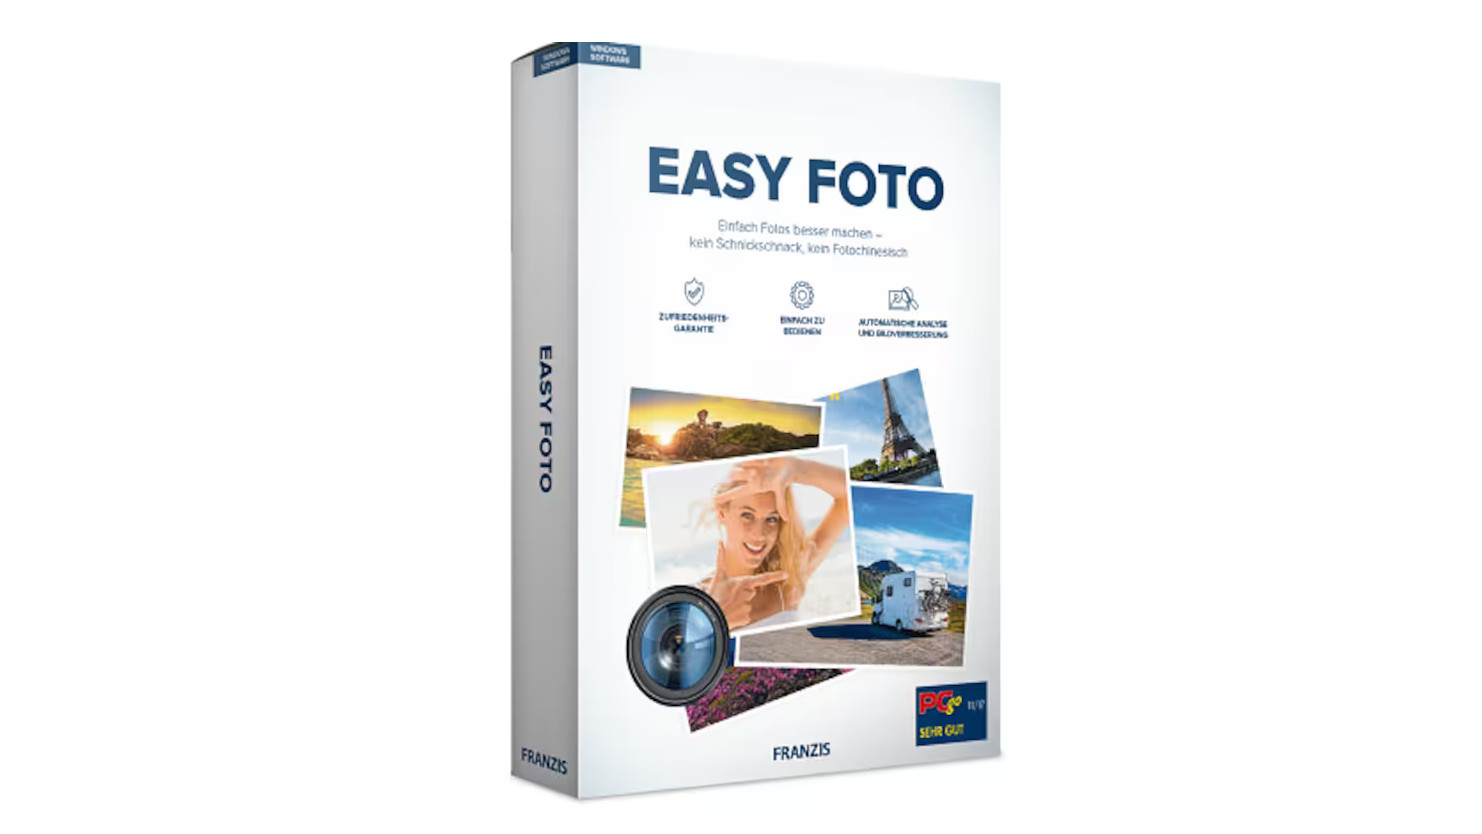 Easy Foto - Project Software Key (Lifetime / 1 PC) [USD 33.89]